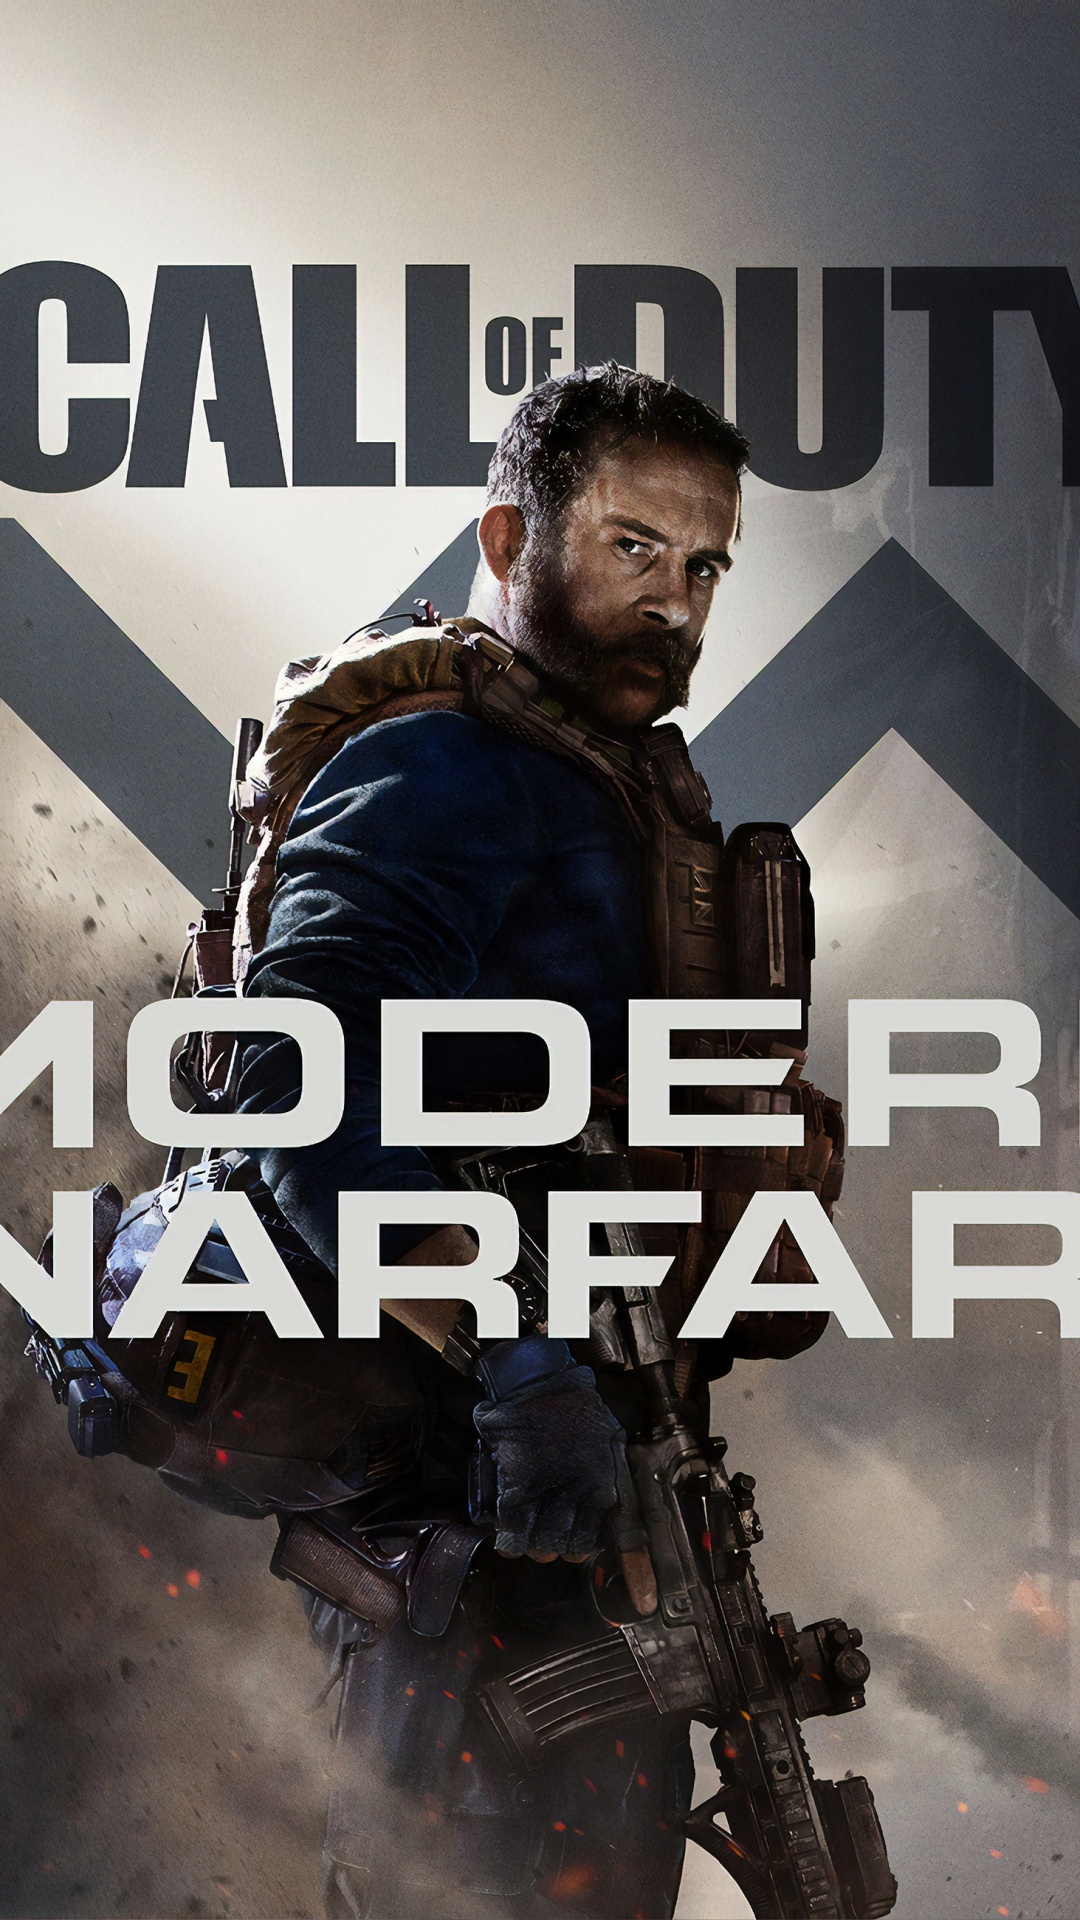 Call of Duty Modern Warfare, Call of Duty 4 Modern Warfare, Movie, pc Game, Shooter Game. Wallpaper in 1080x1920 Resolution